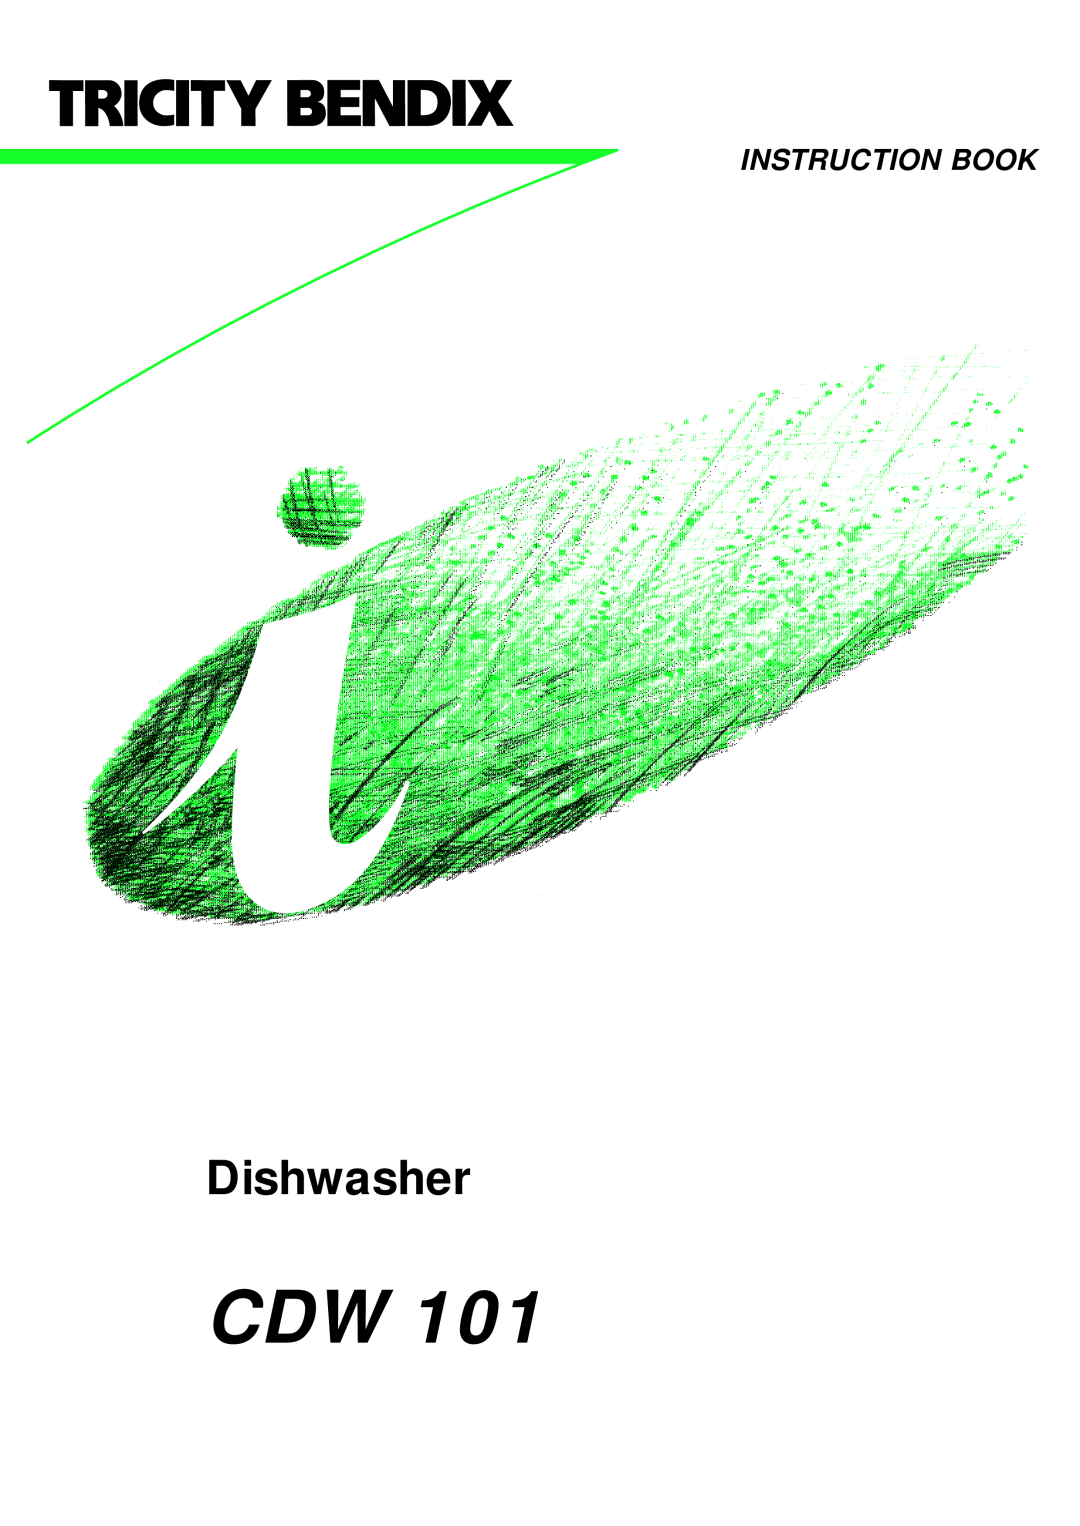 Tricity Bendix CDW 101 manual Dishwasher, Instruction Book 